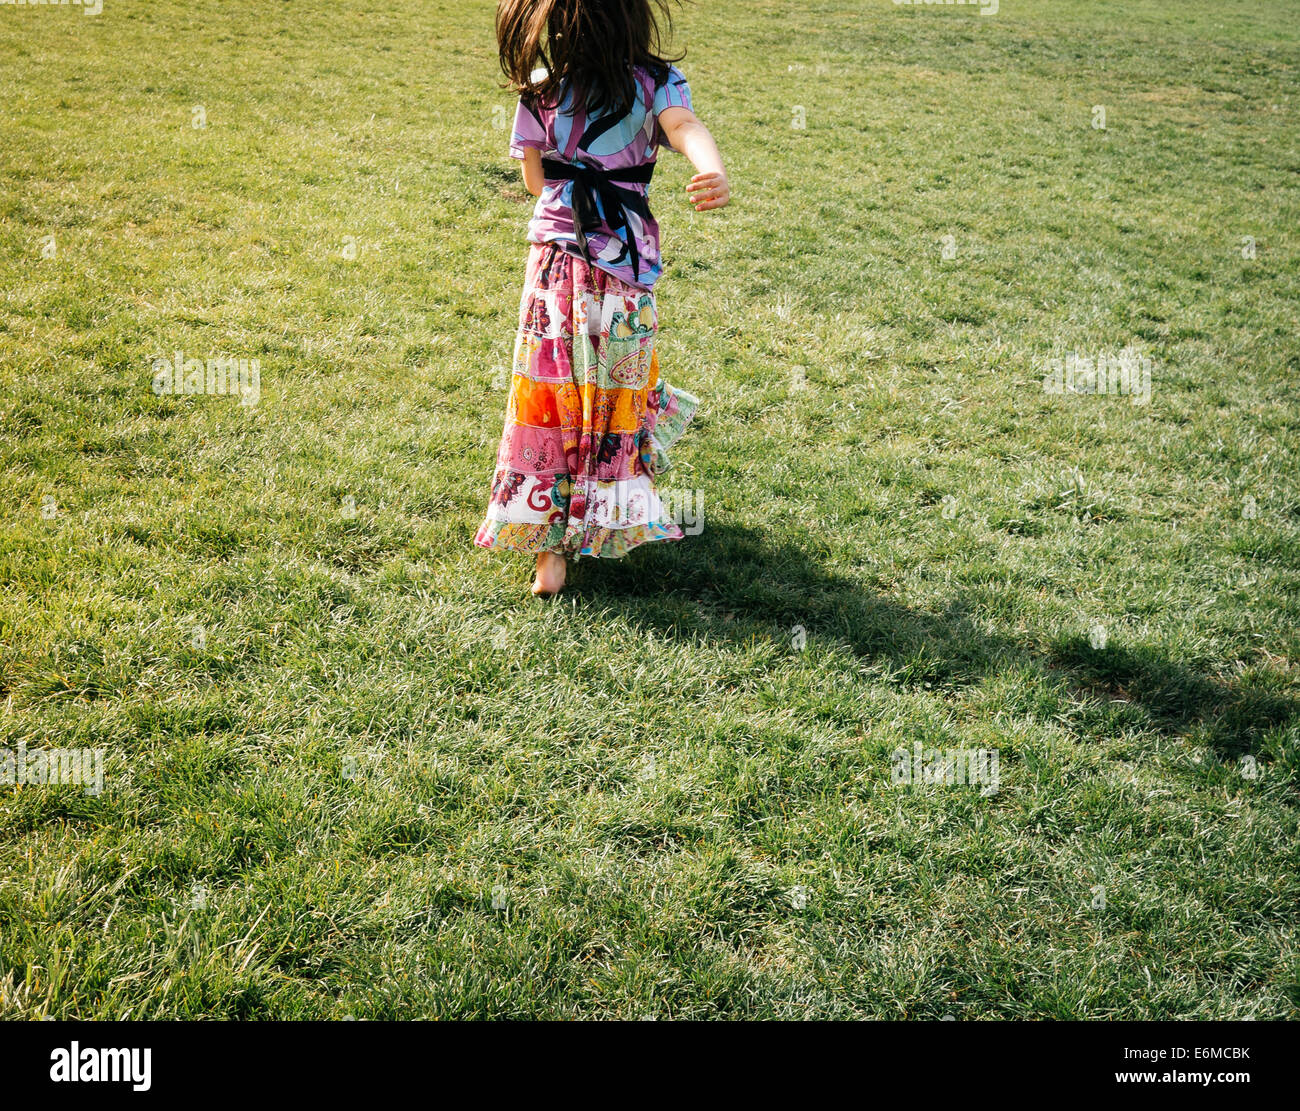 Girl running in field Stock Photo